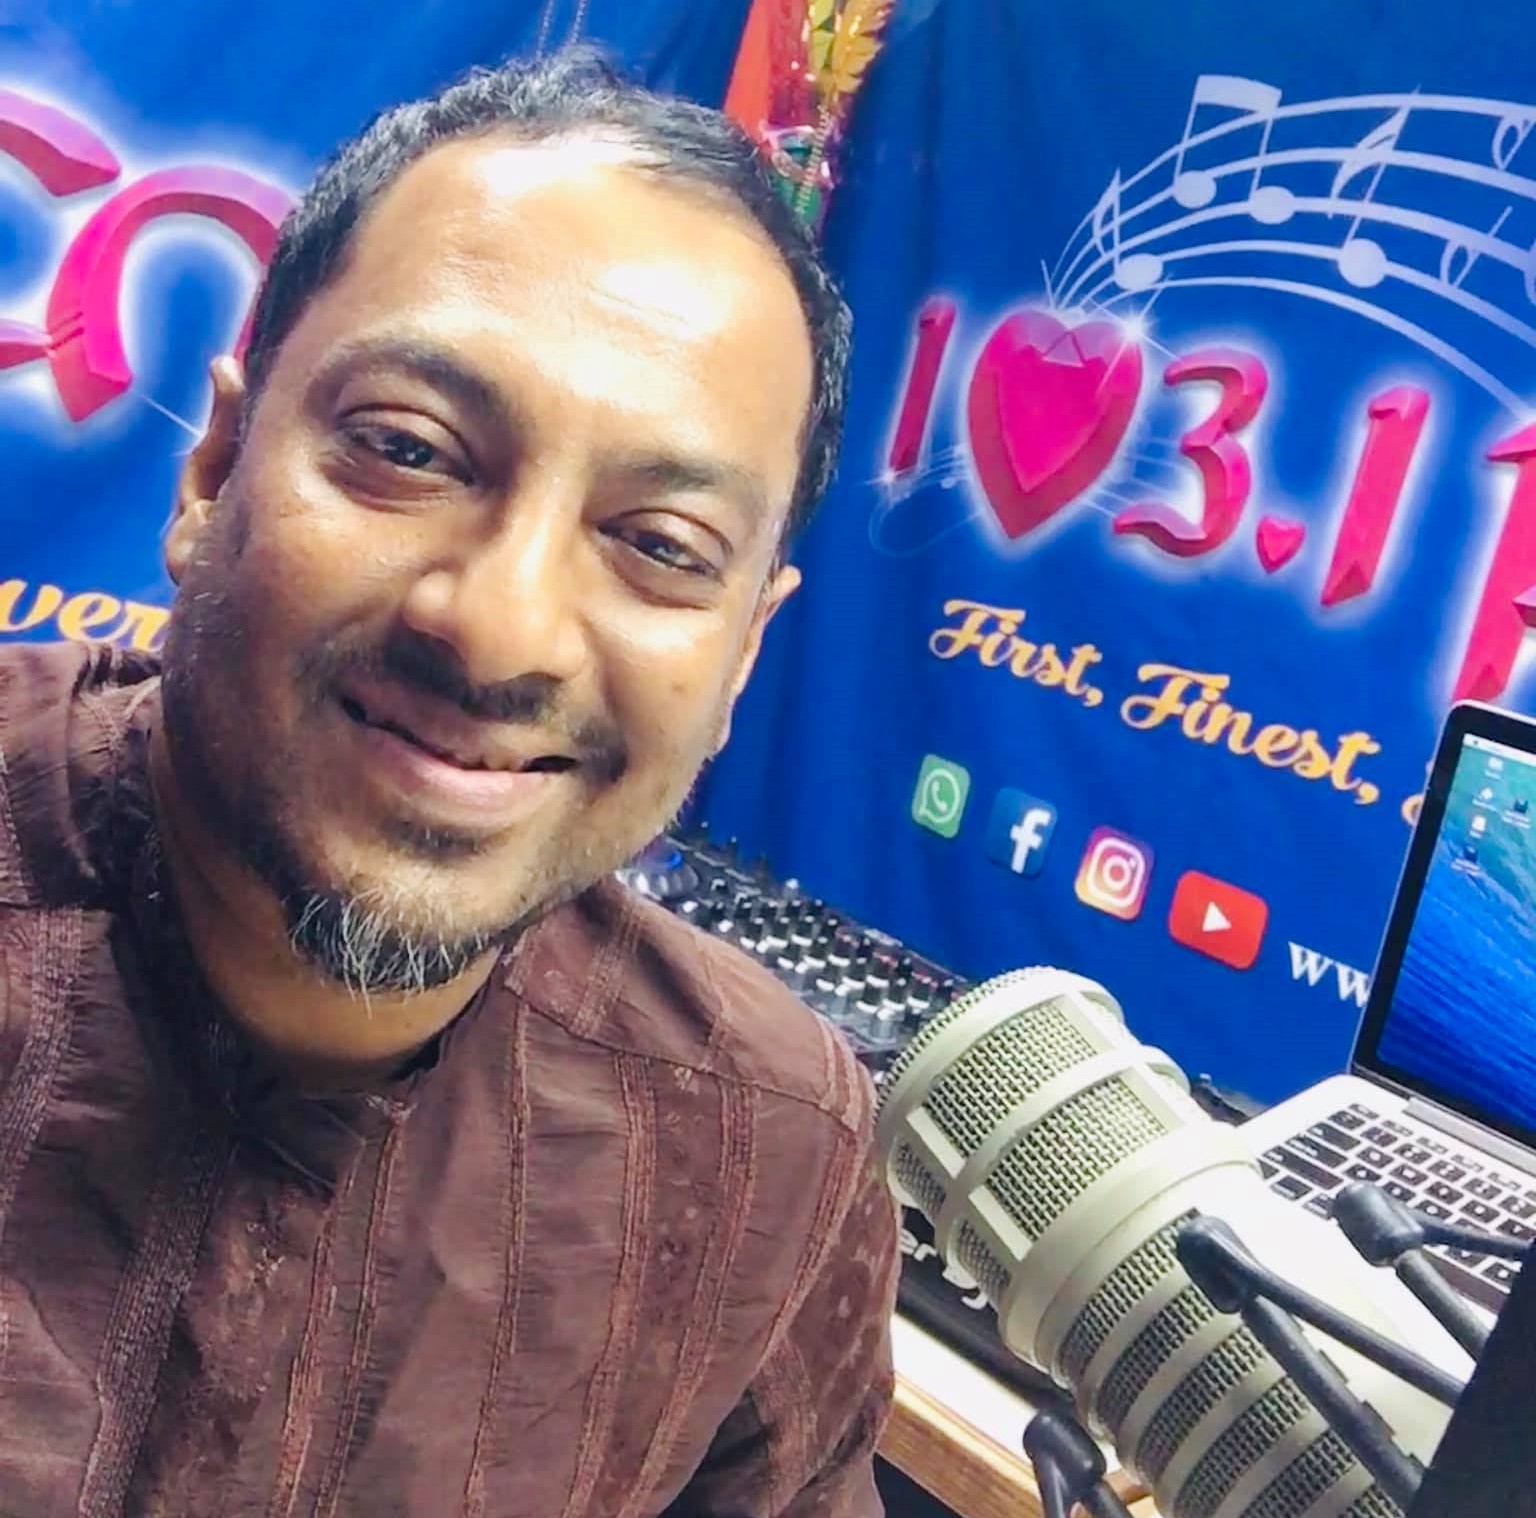 Singer, radio personality Anil Bheem has died